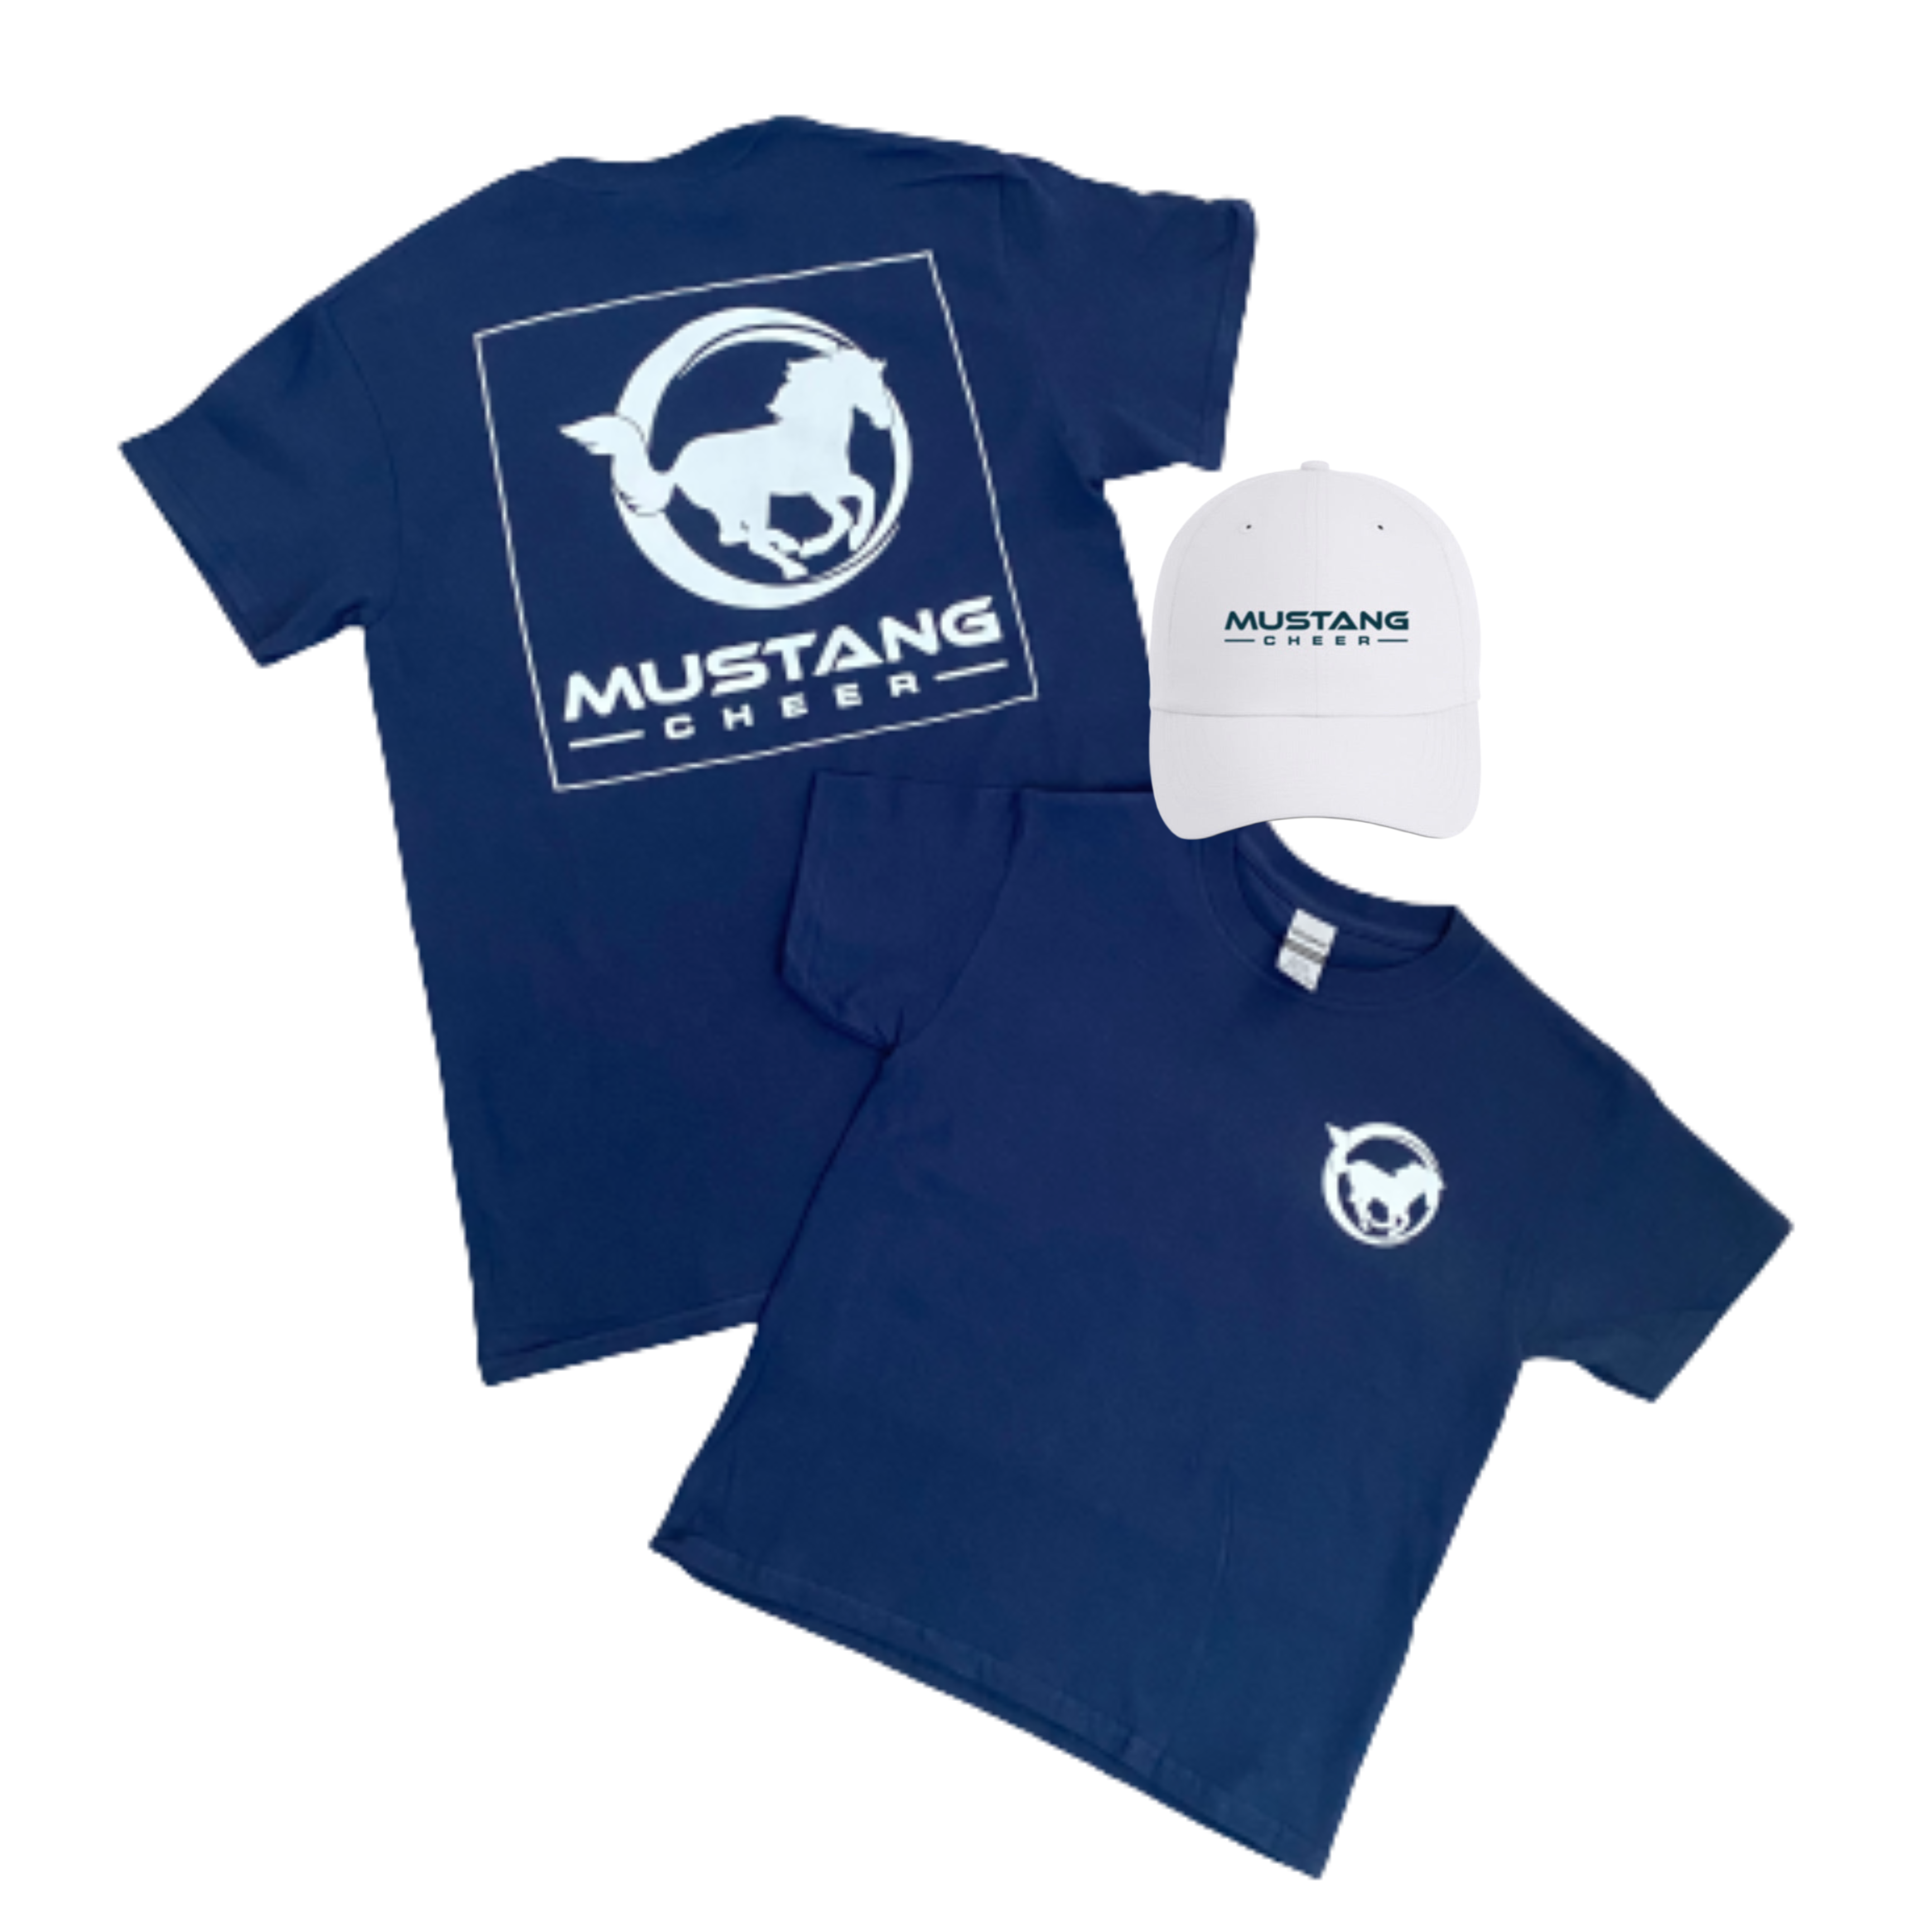 Mustangs Football Cheer Blue White School Spirit T-Shirt